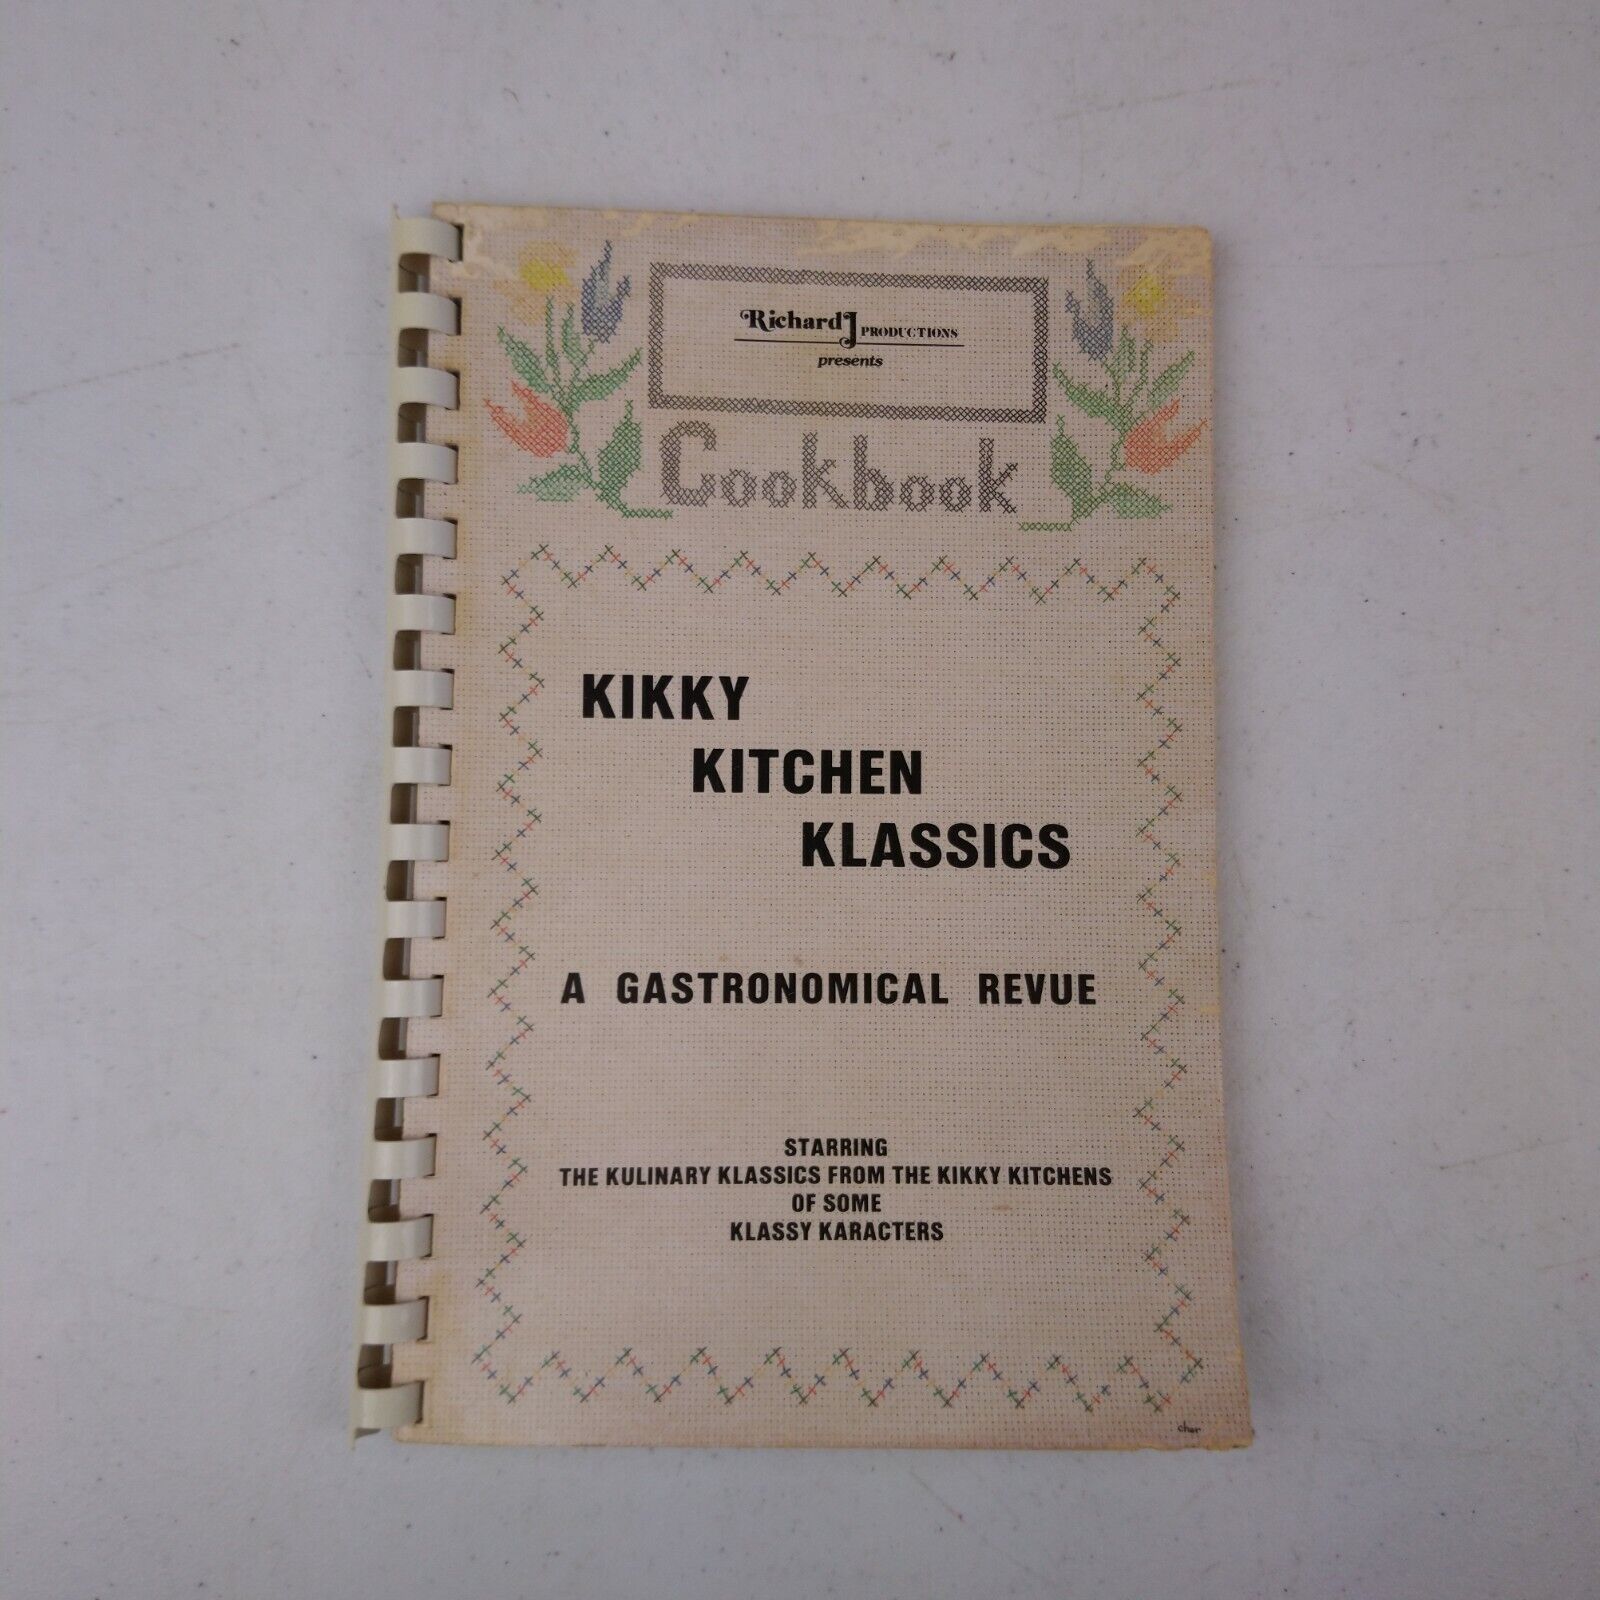 VTG 1983 Kikky Kitchen Klassics Cookbook Richard J. Productions 